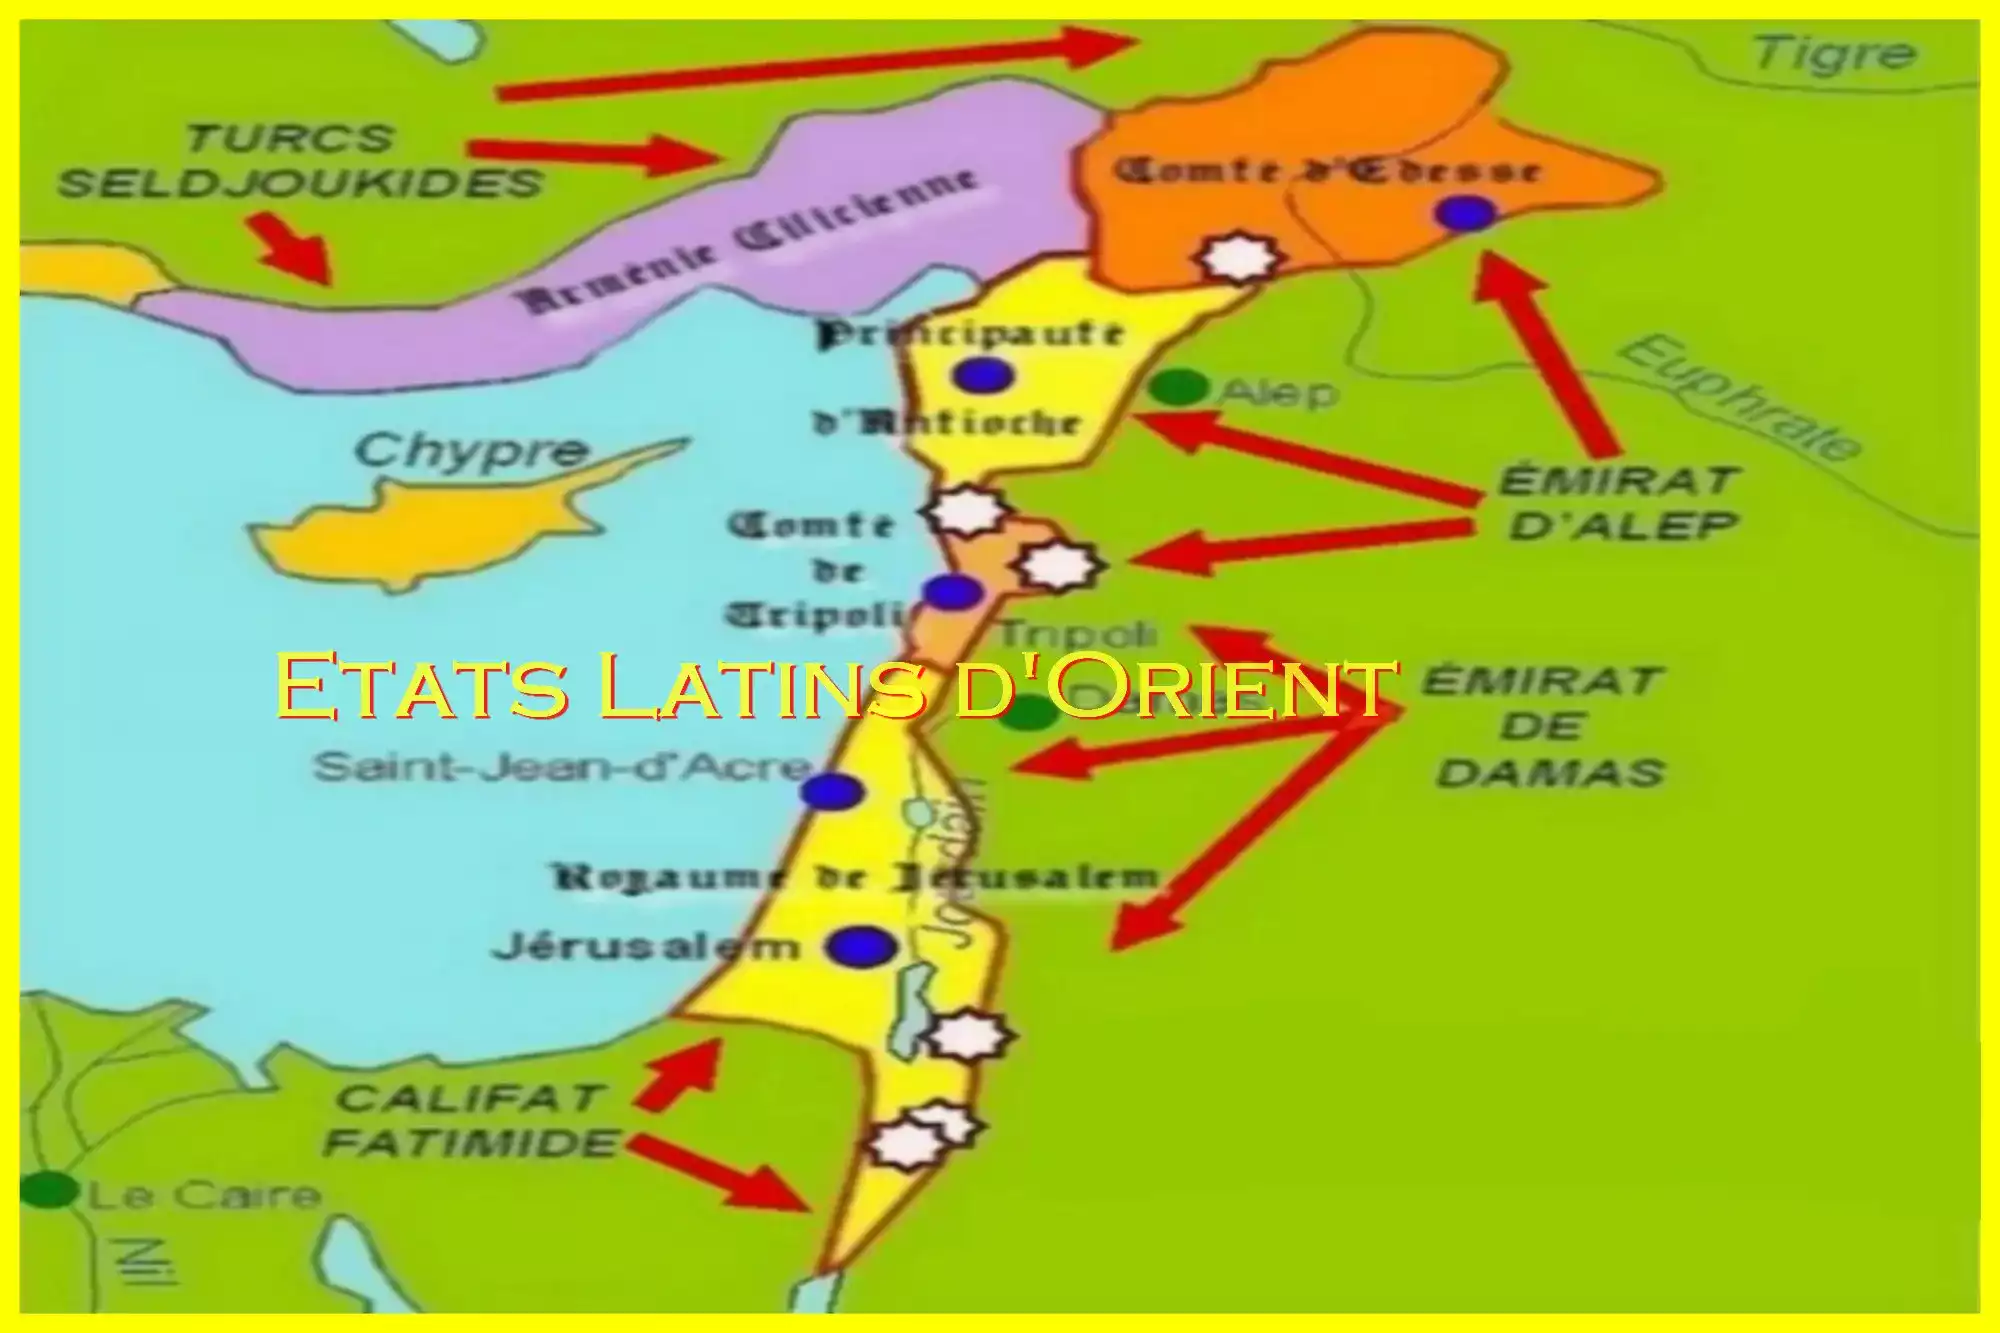 Les états latins d'orient